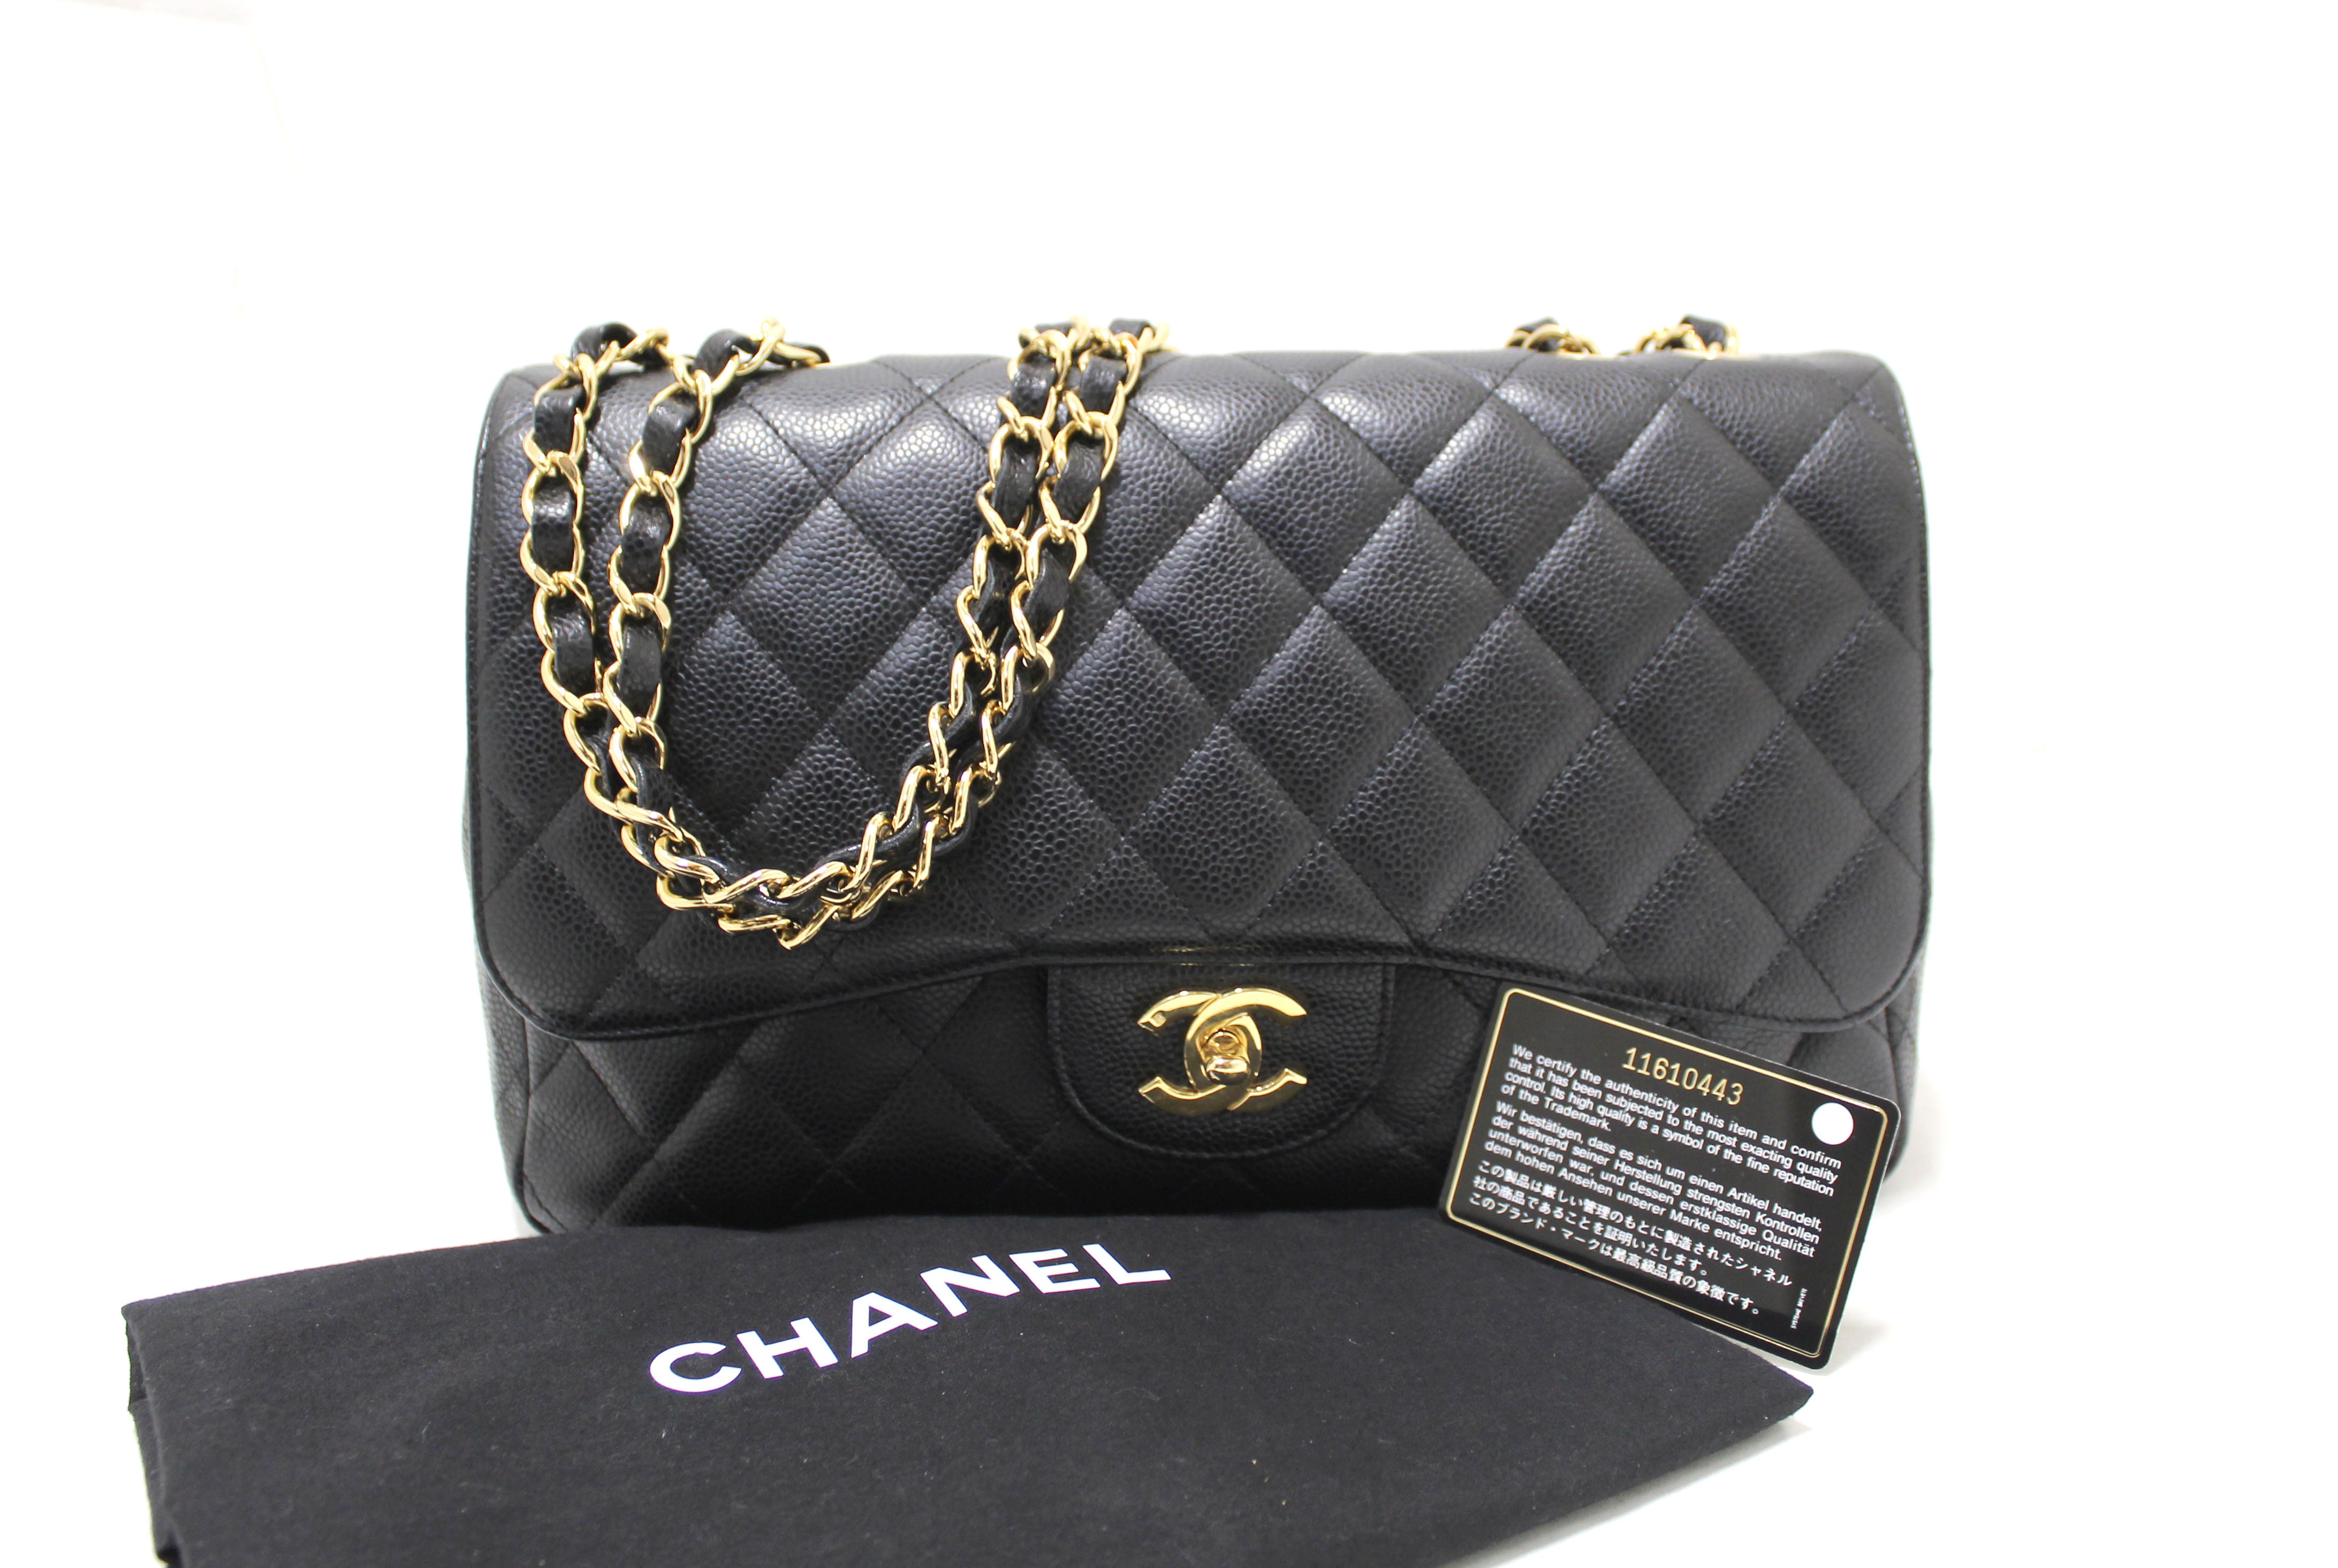 Chanel classic jumbo single flap bag caviar leather with gold